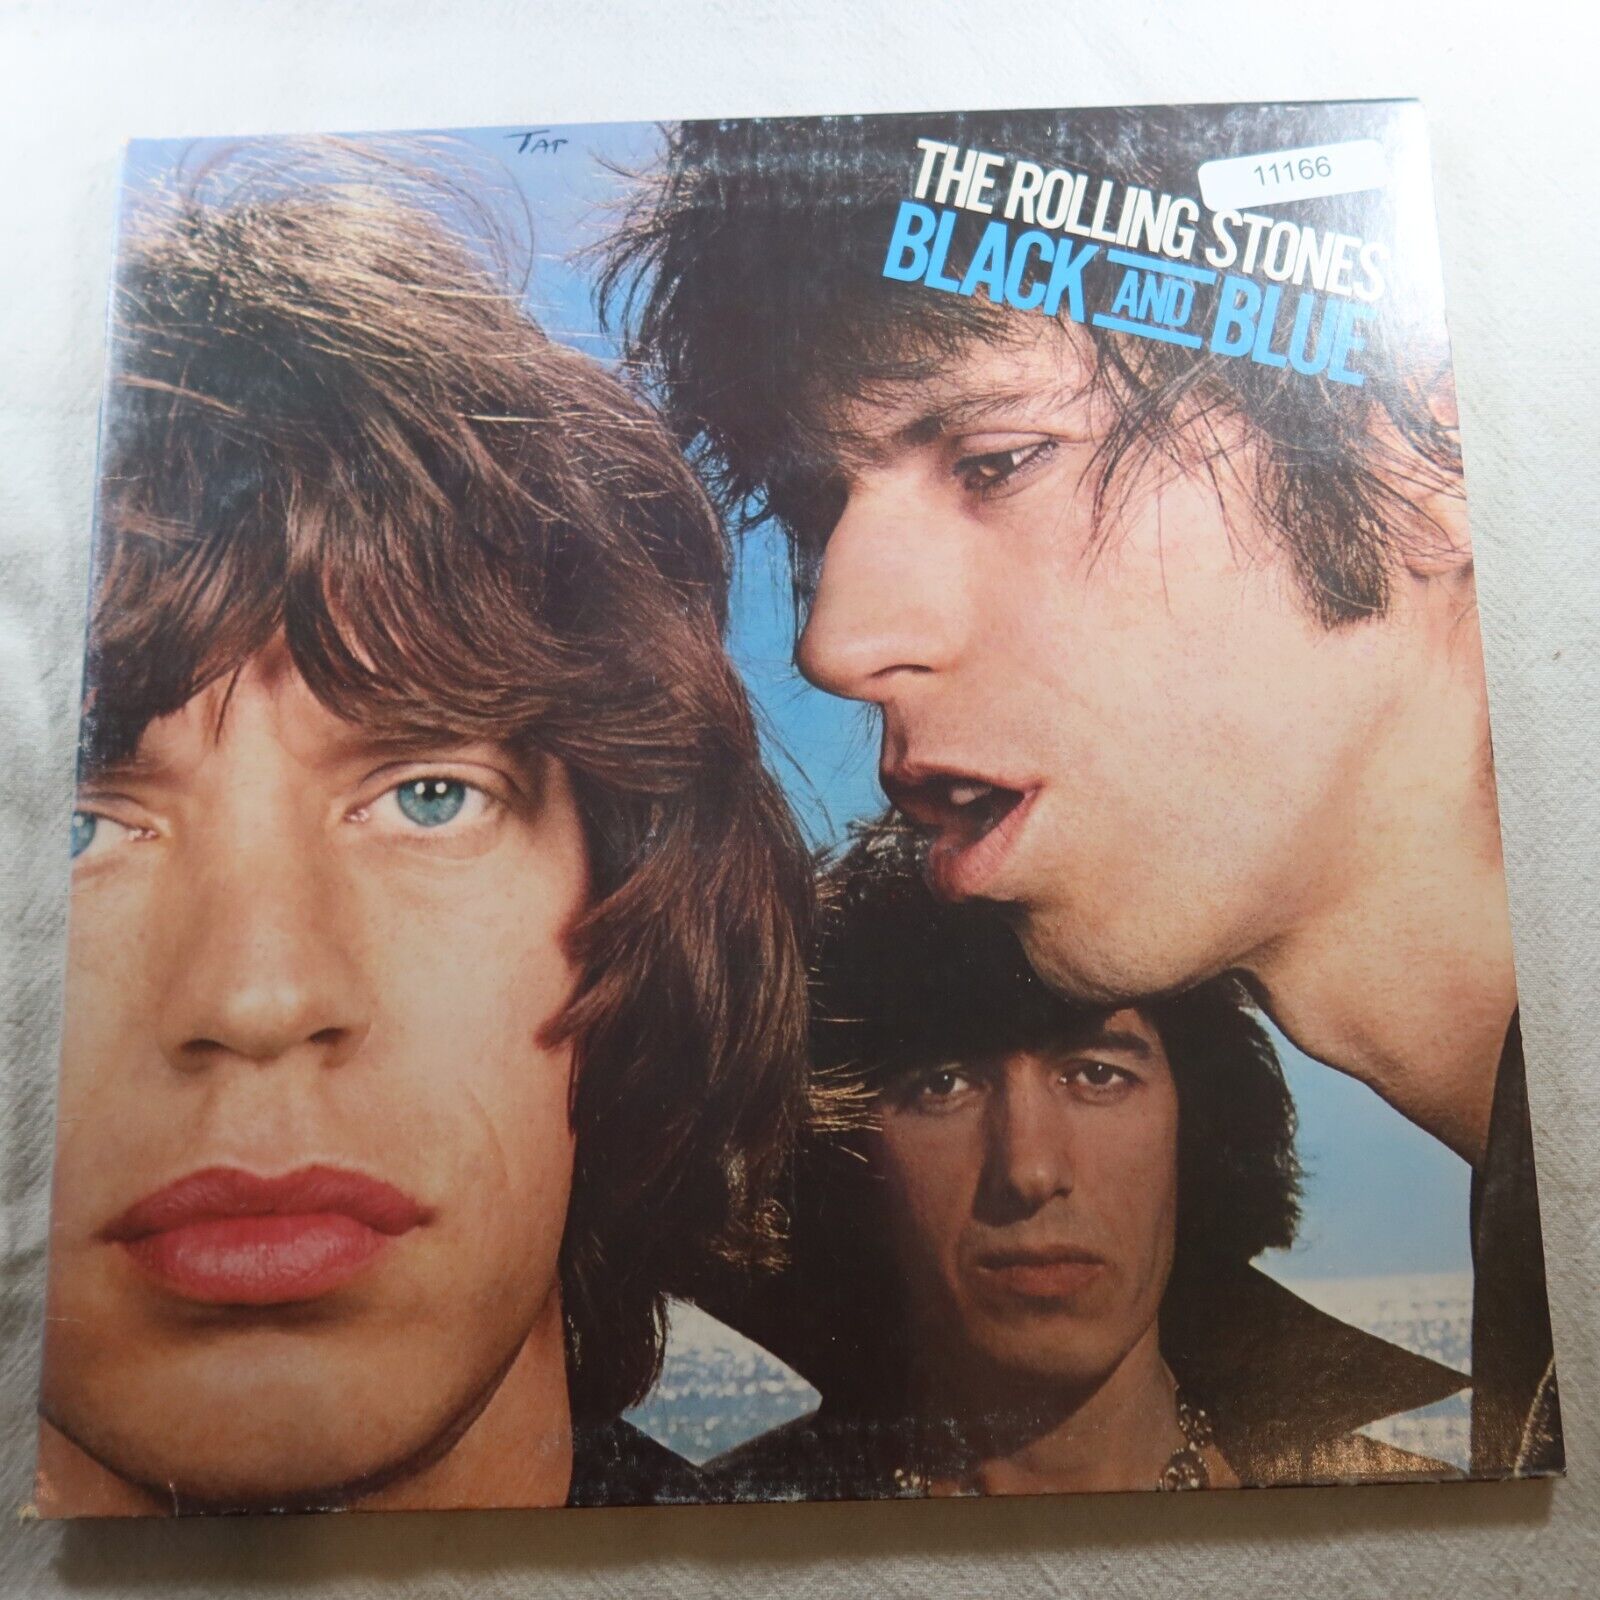 The Rolling Stones Black And Blue   Record Album Vinyl LP